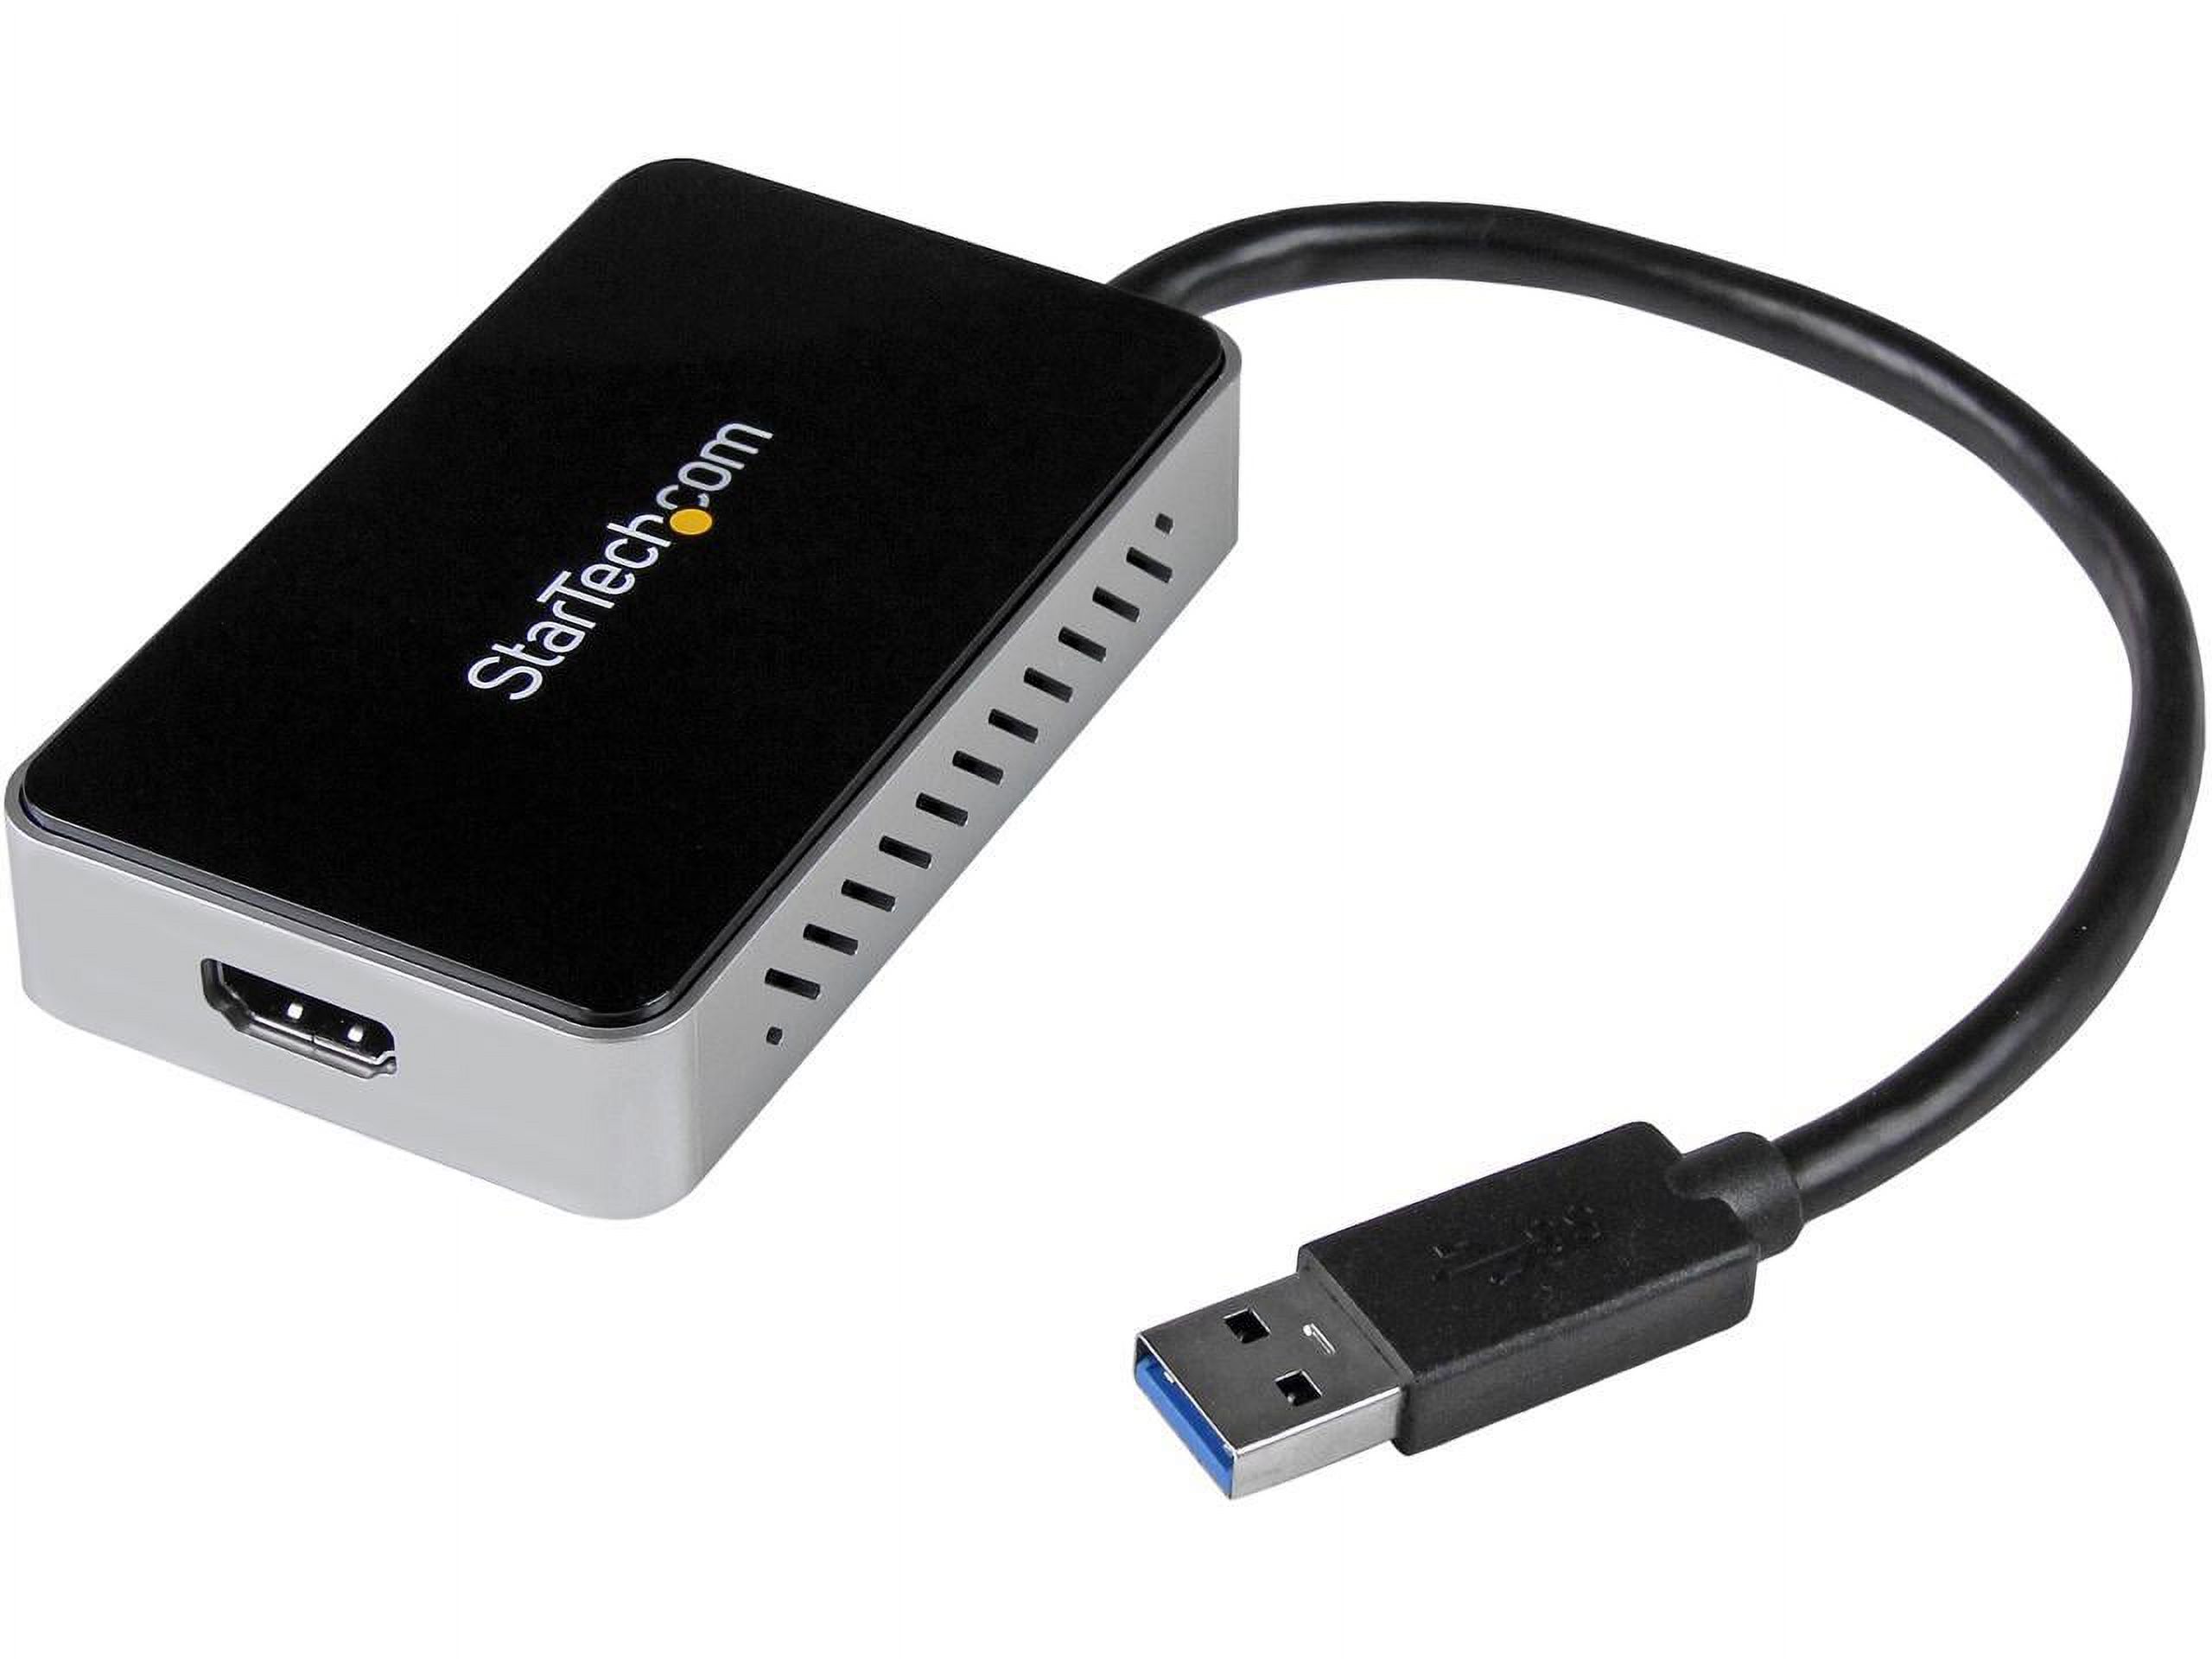 StarTech.com USB32HDEH USB 3.0 to HDMI External Video Card Adapter - 1 Port USB Hub - 1080p - External Graphics Card for Laptops - USB Video Card - image 1 of 6